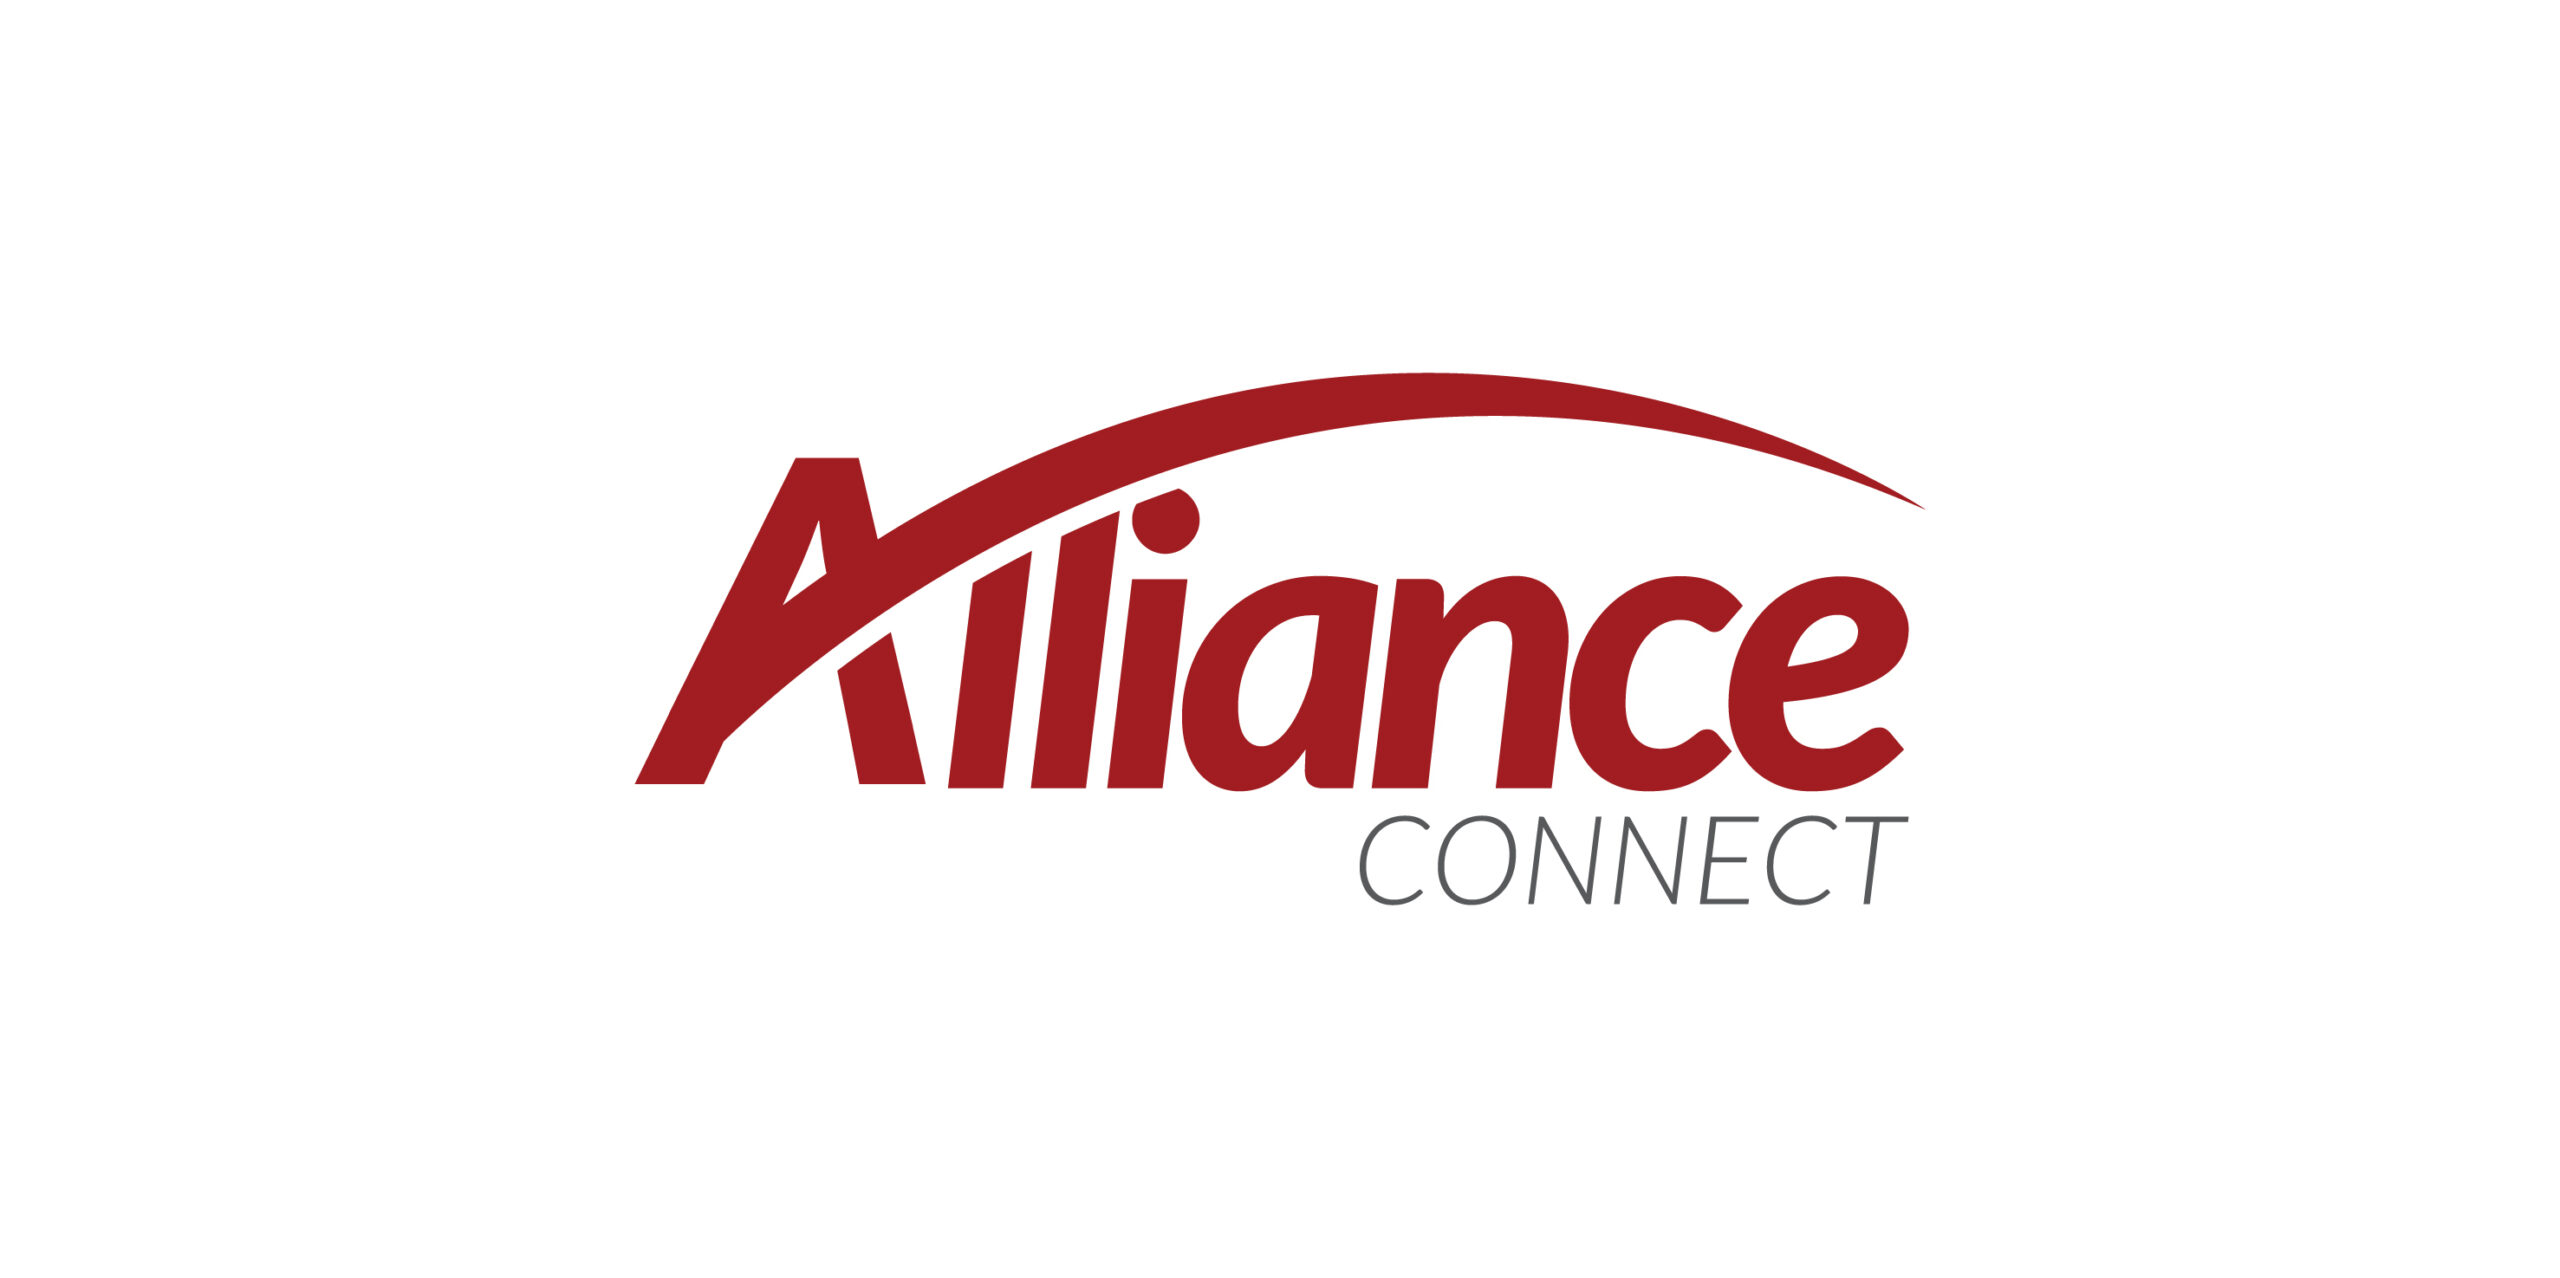 Alliance Connect